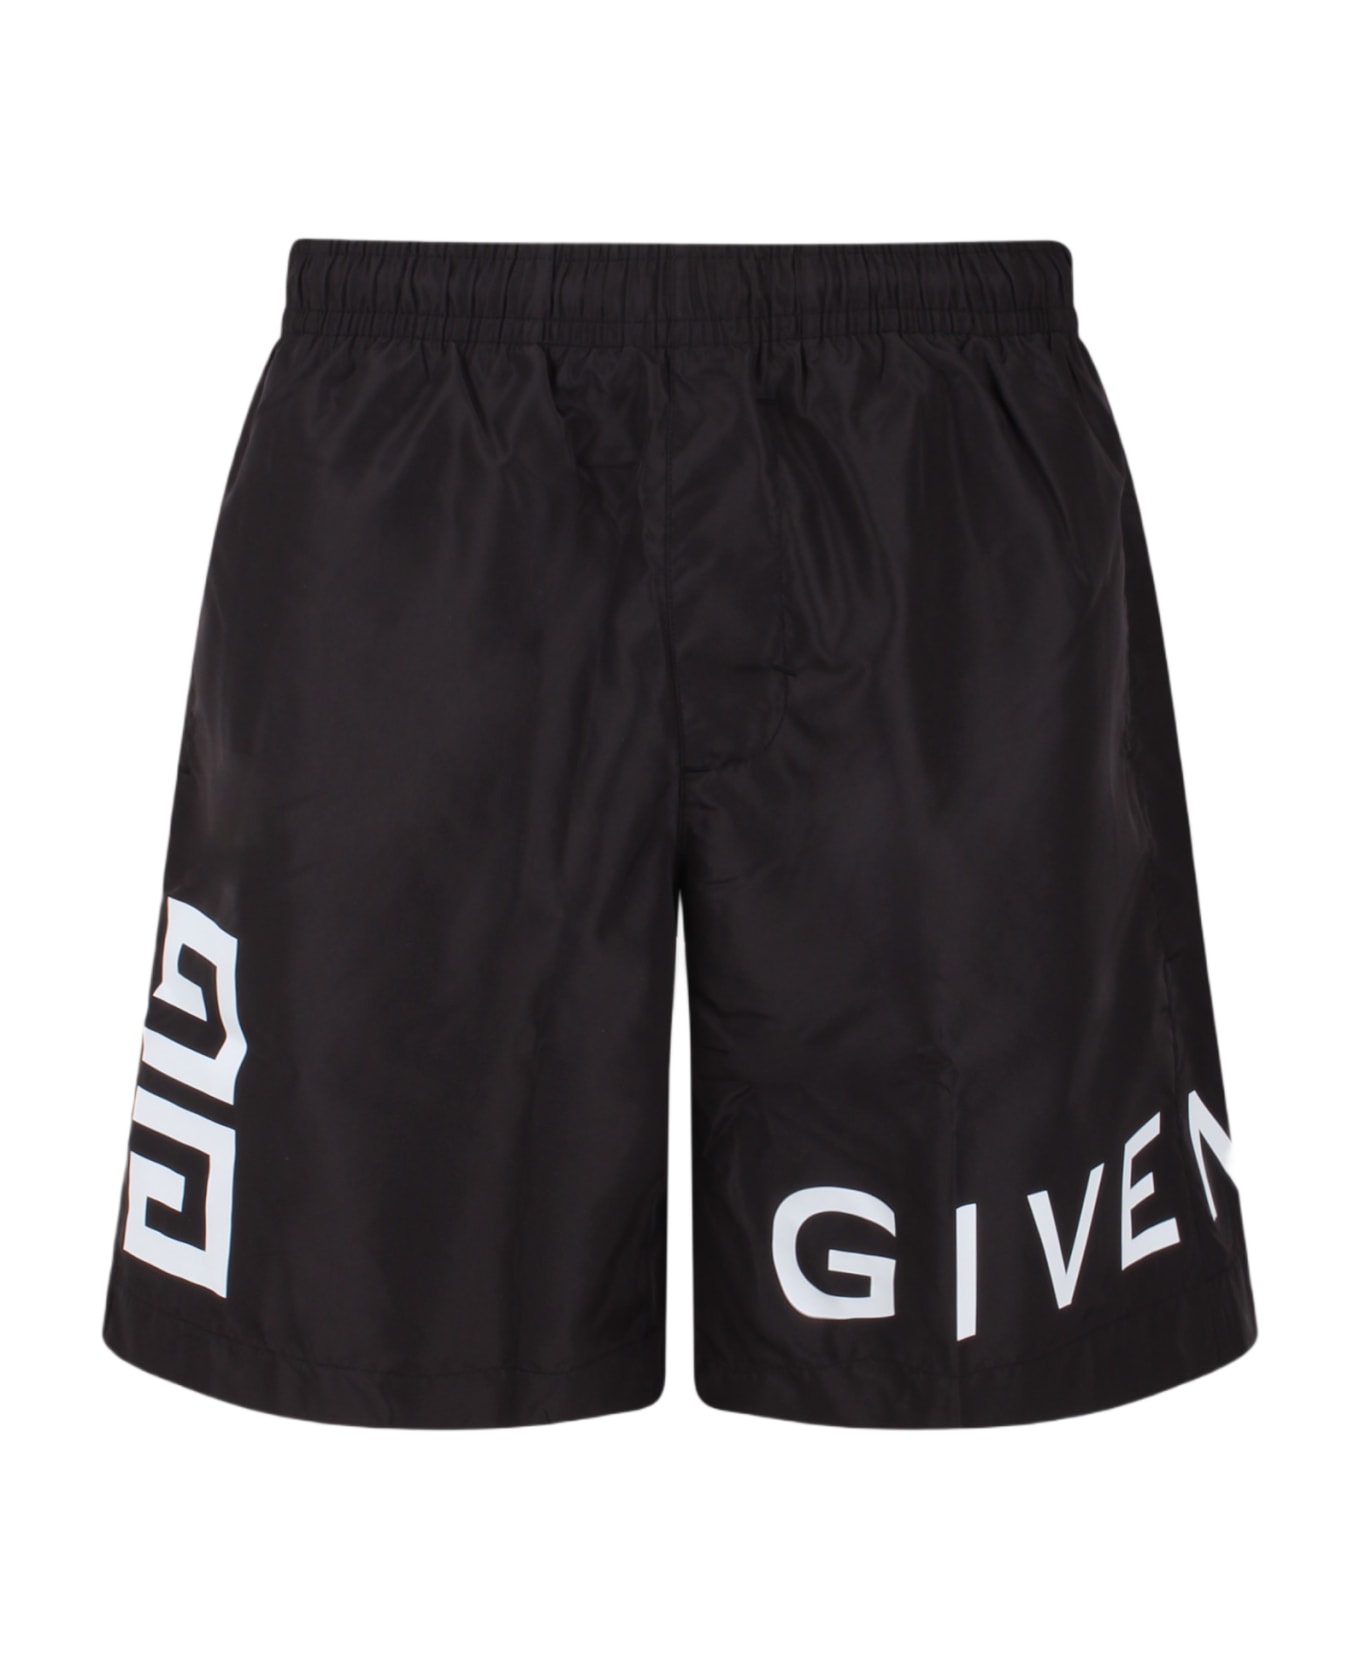 Givenchy 4g Swimshort - Black